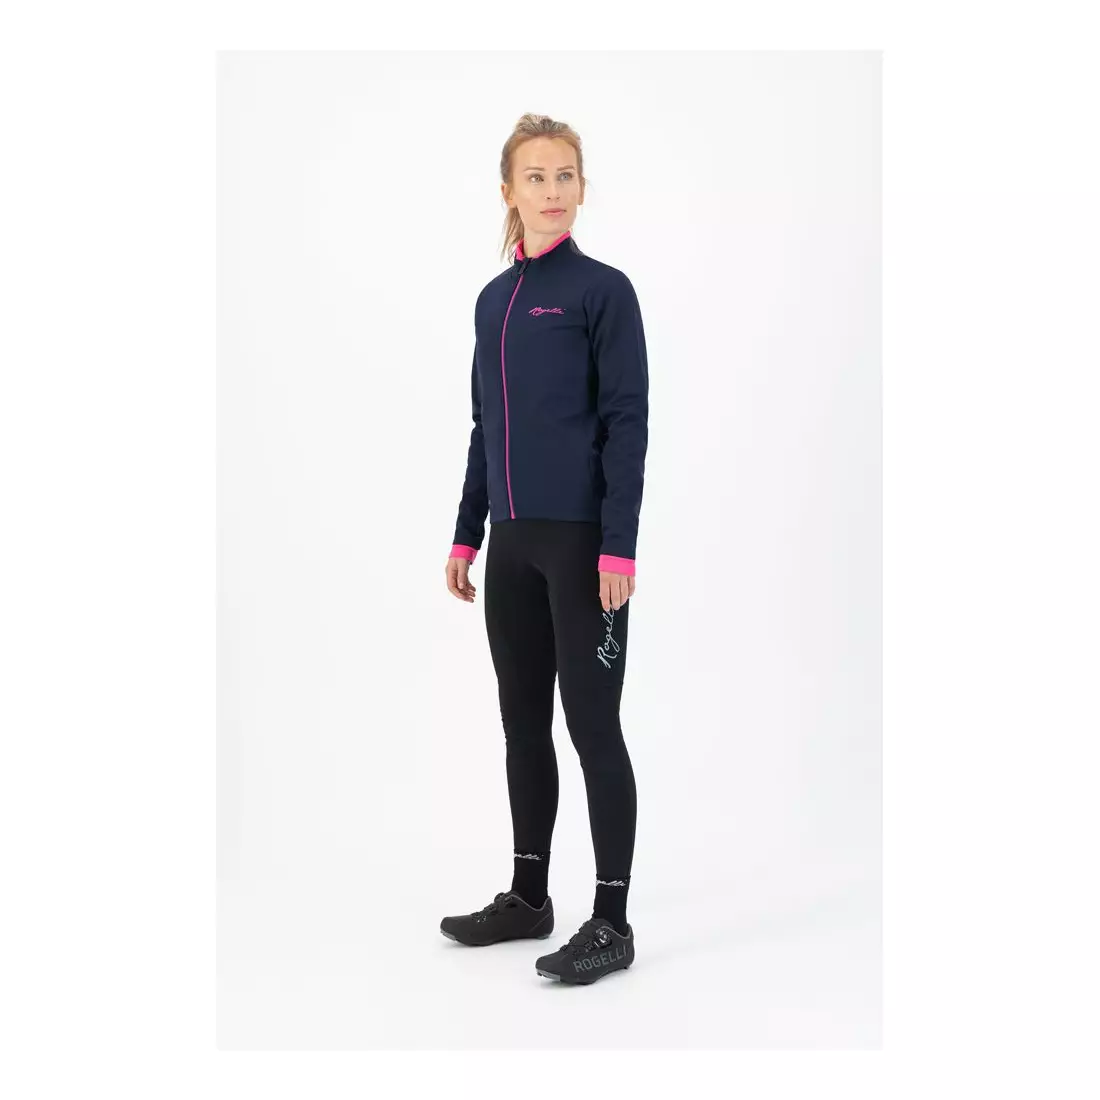 ROGELLI women's winter cycling jacket ESSENTIAL navy blue ROG351097